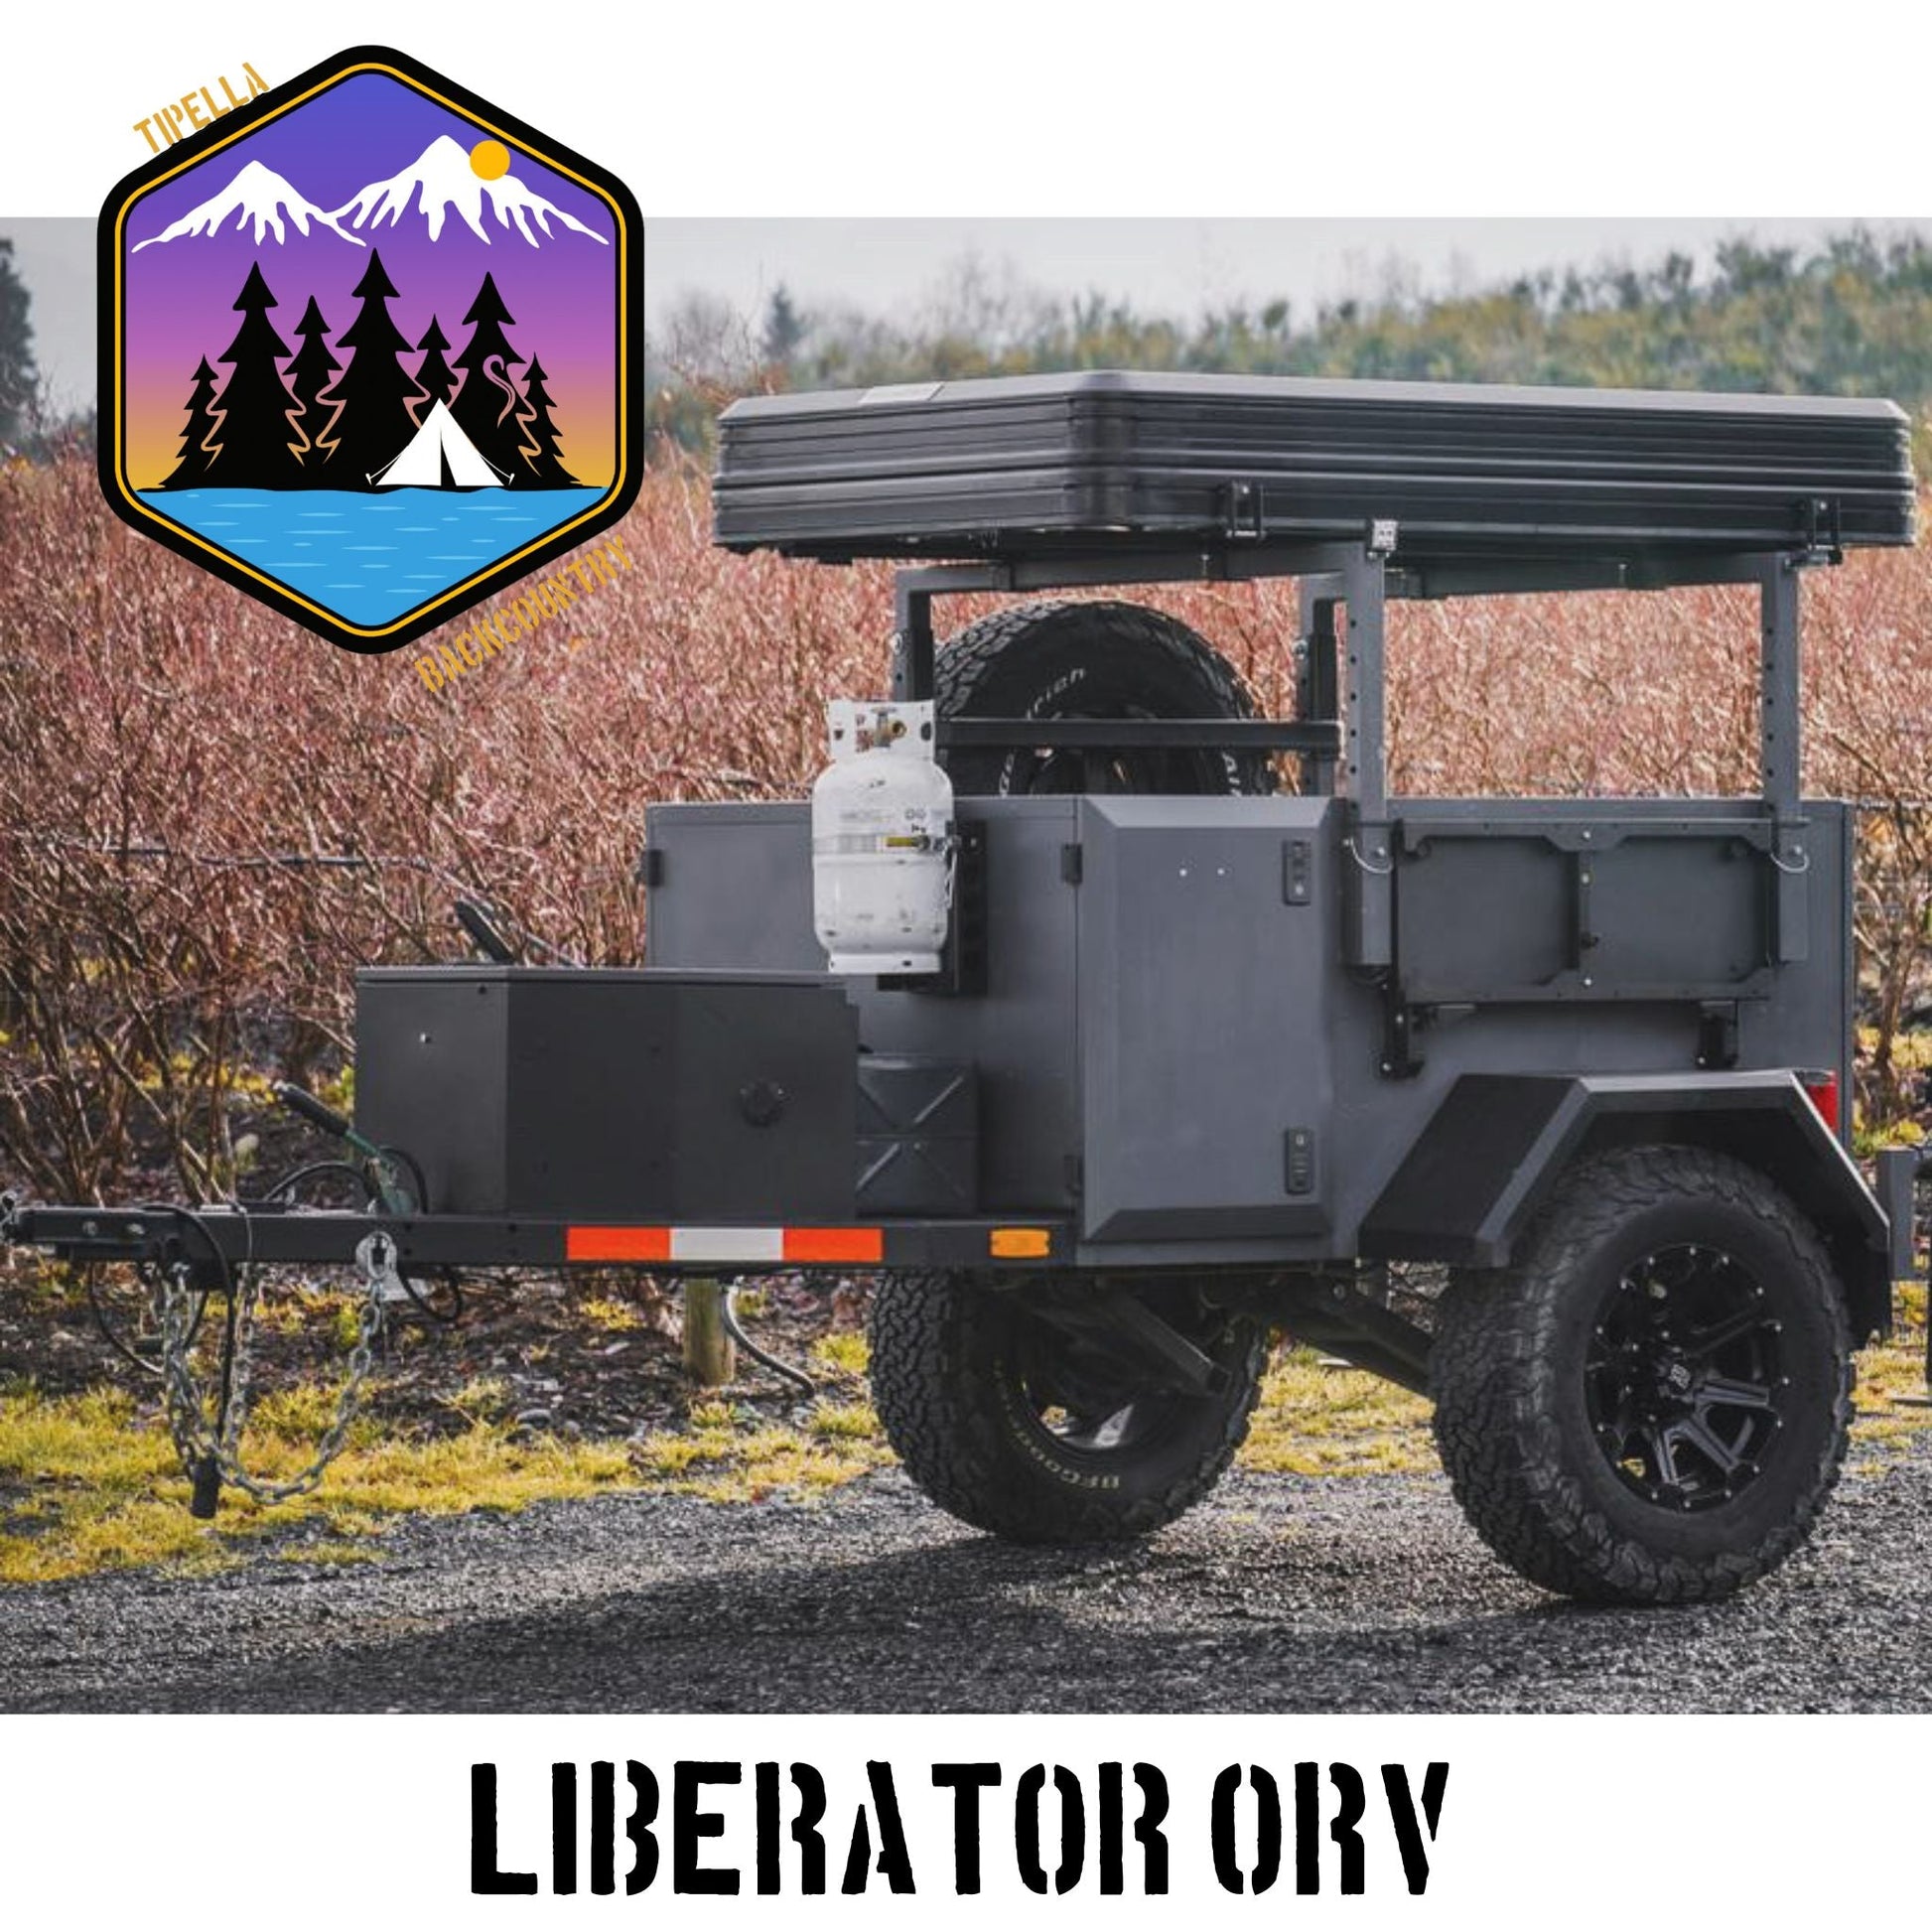 Full build Liberator